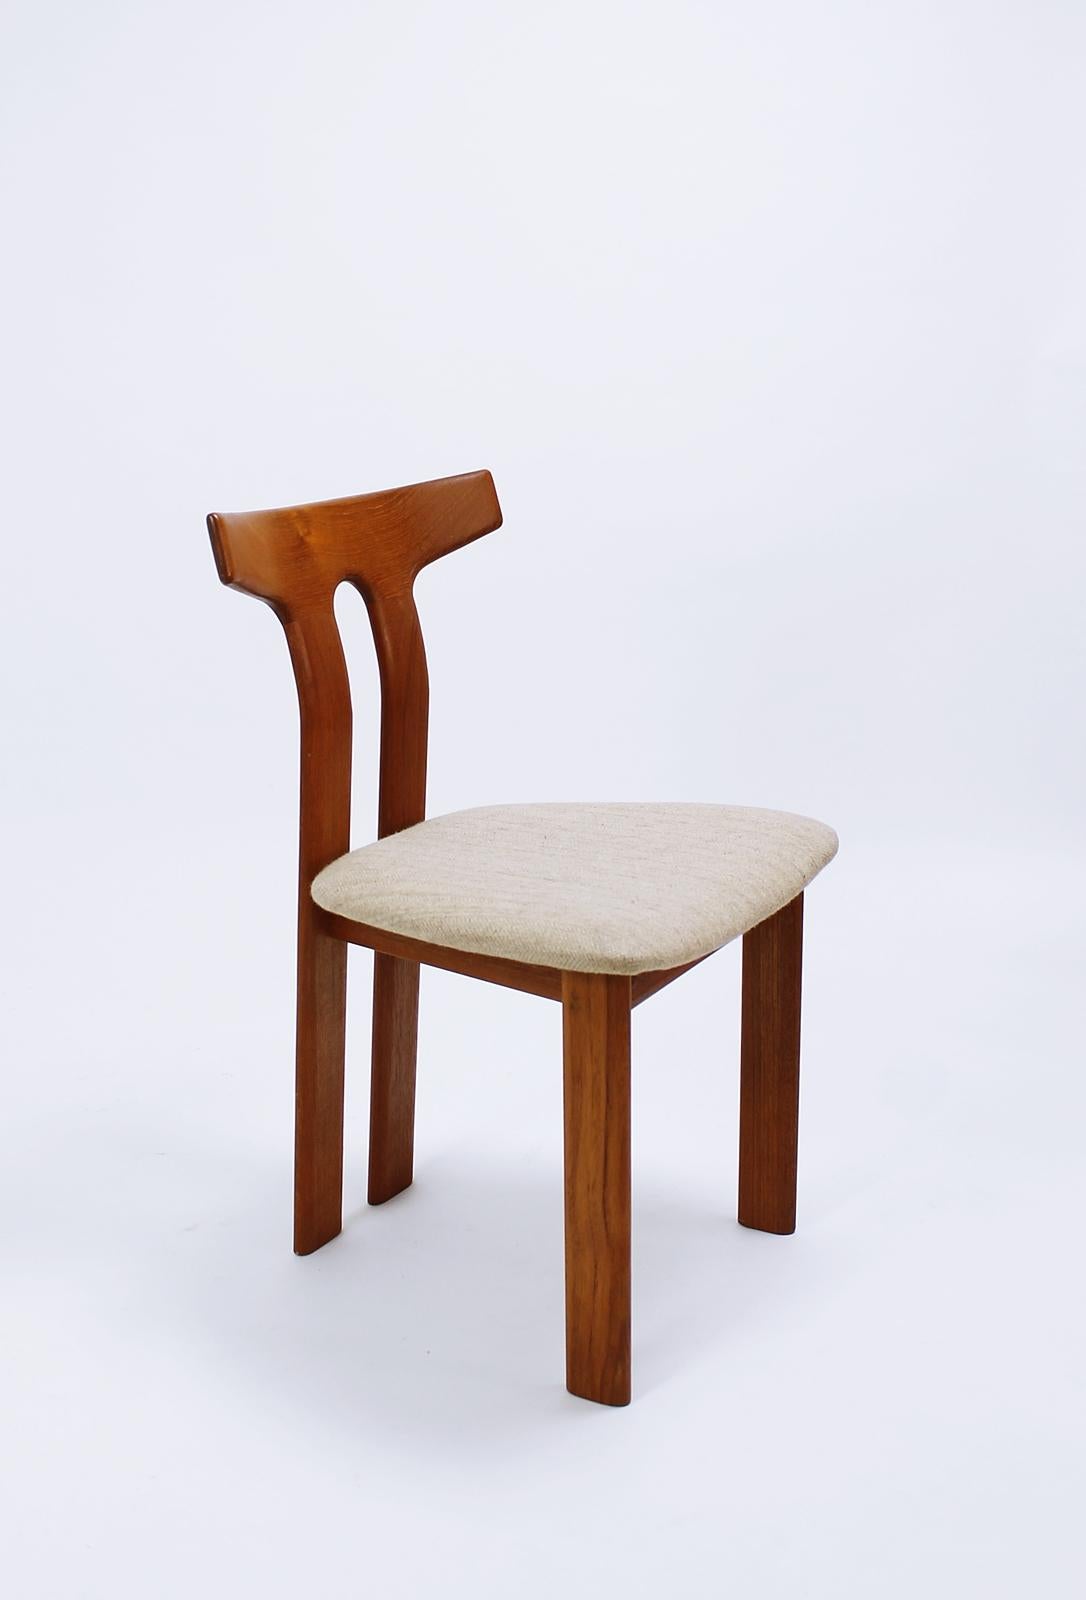 Danish Mid-Century Modern Teak Chairs by Vamdrup, Denmark, 1970s